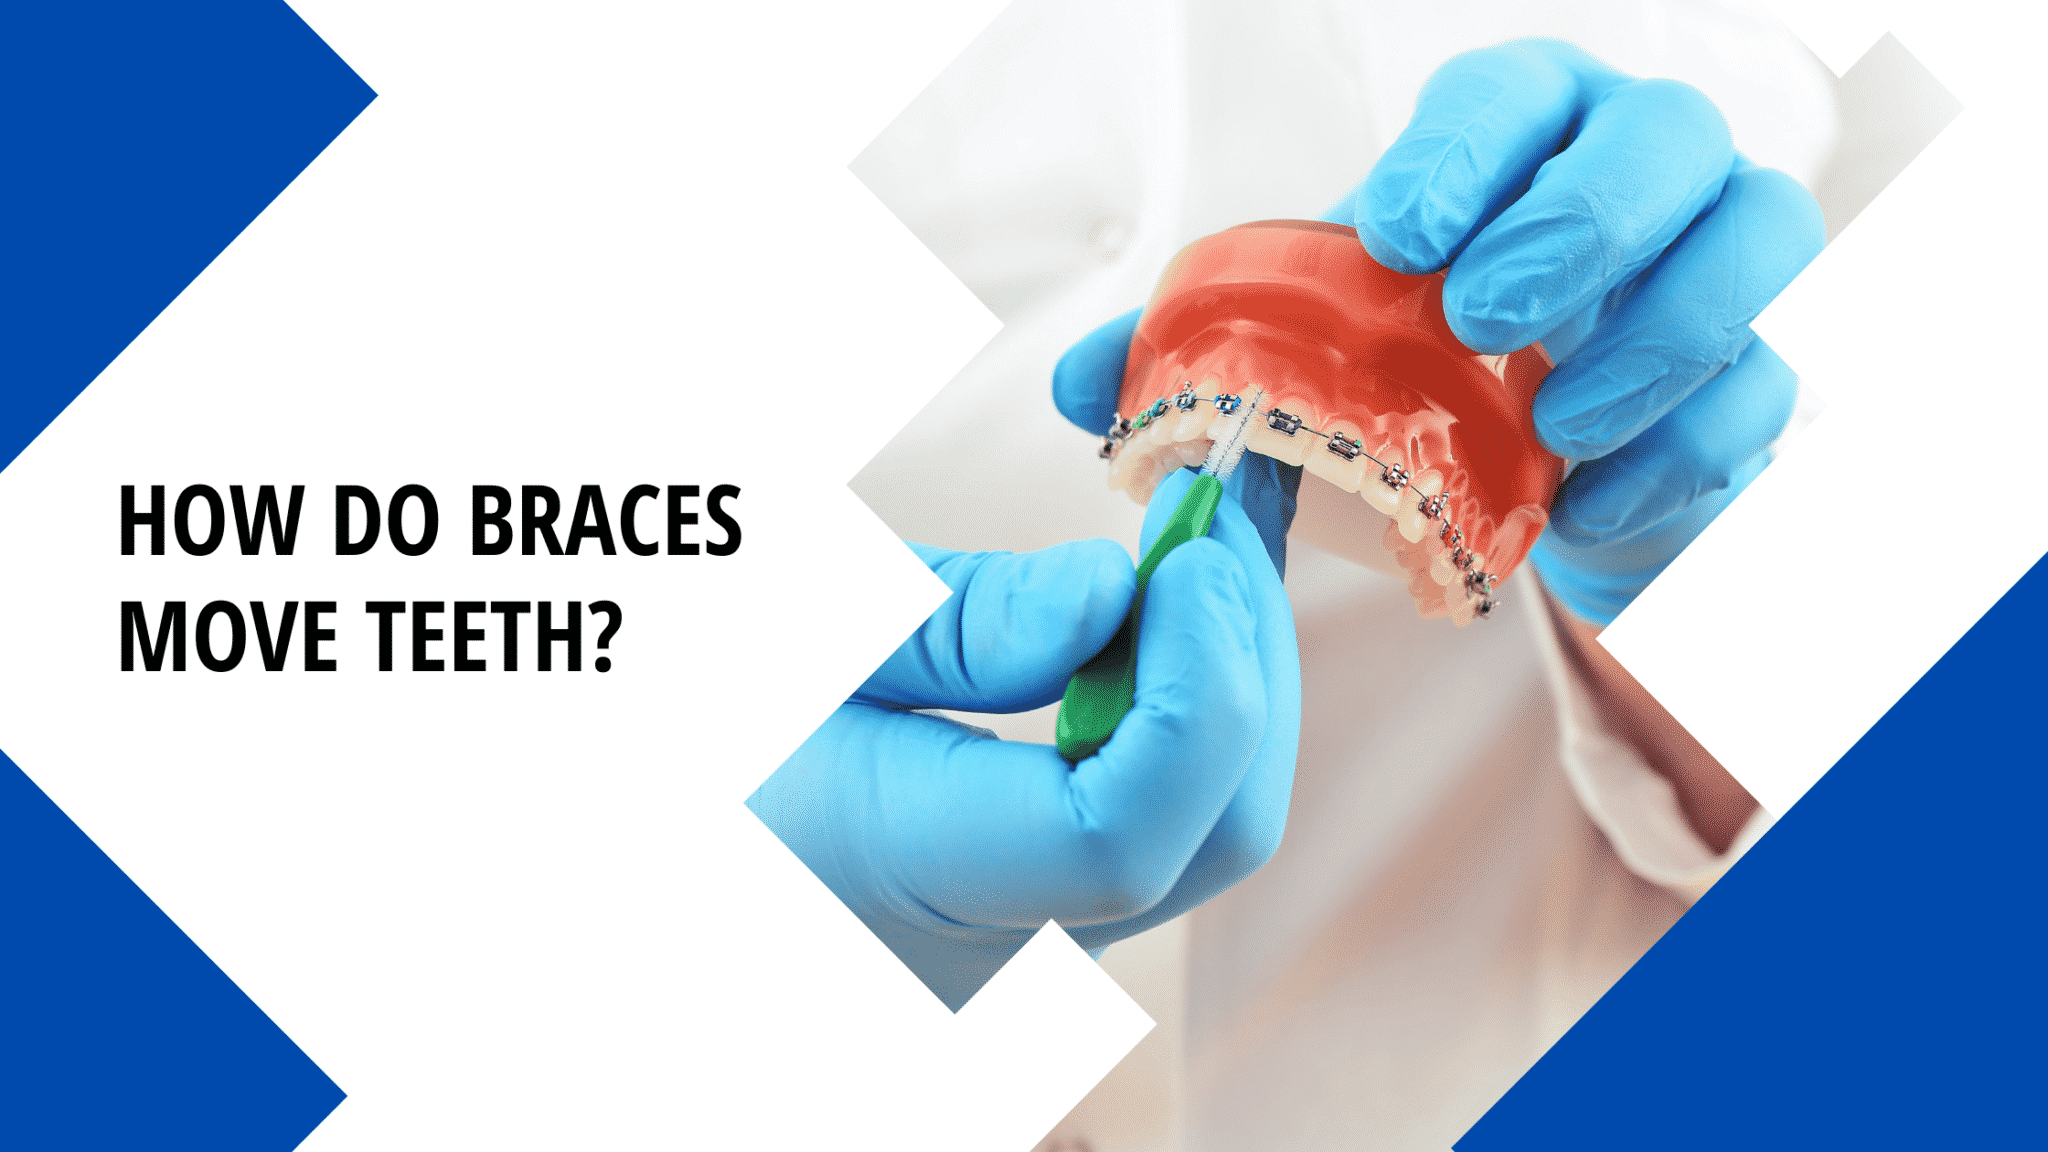 How braces move teeth to straighten them